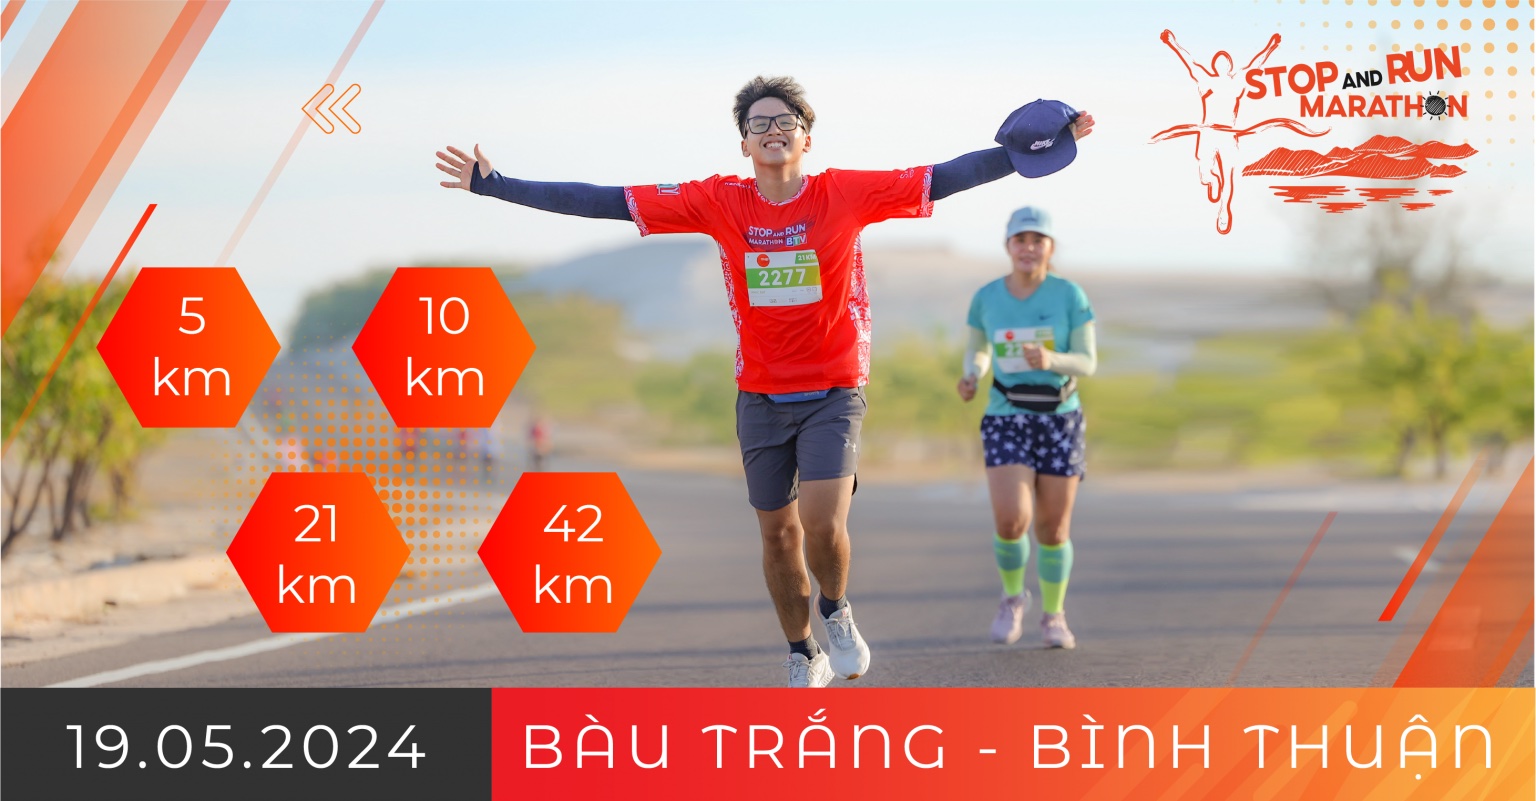 Stop and Run Marathon Bình Thuận 2024 - stop and run marathon 2024 1